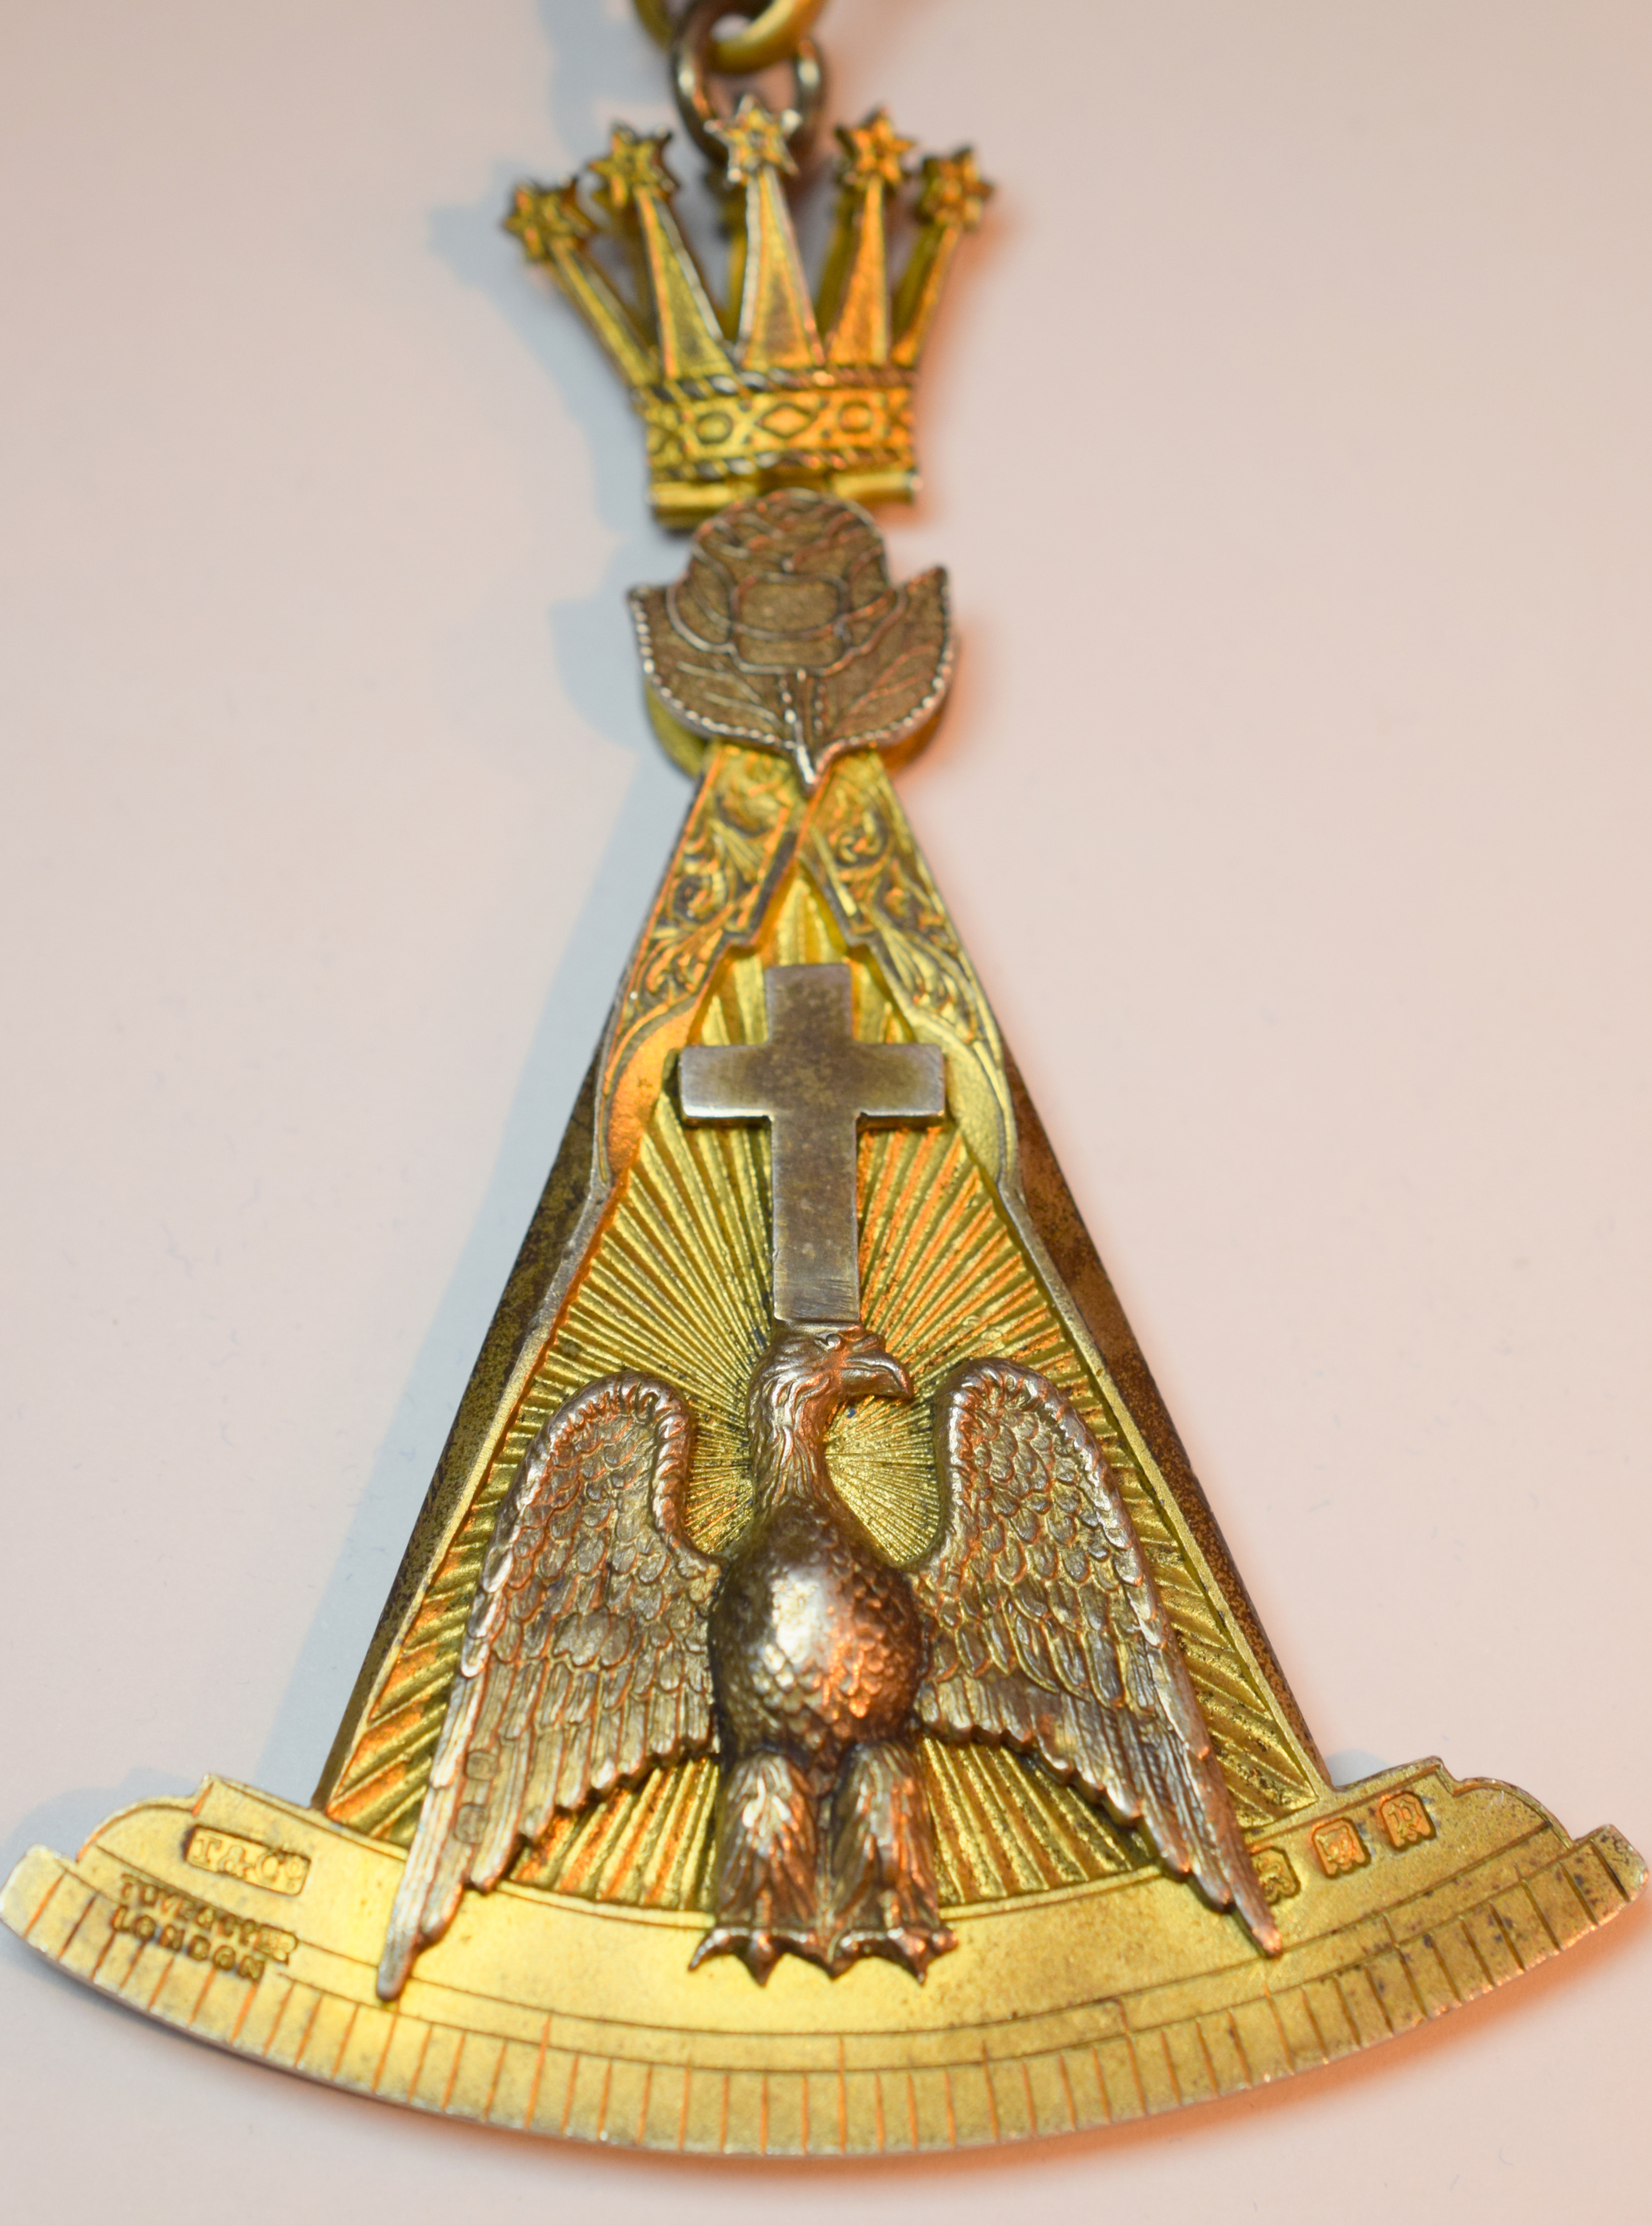 Masonic Sash With Masonic Jewel Medal 1885 - Image 4 of 6